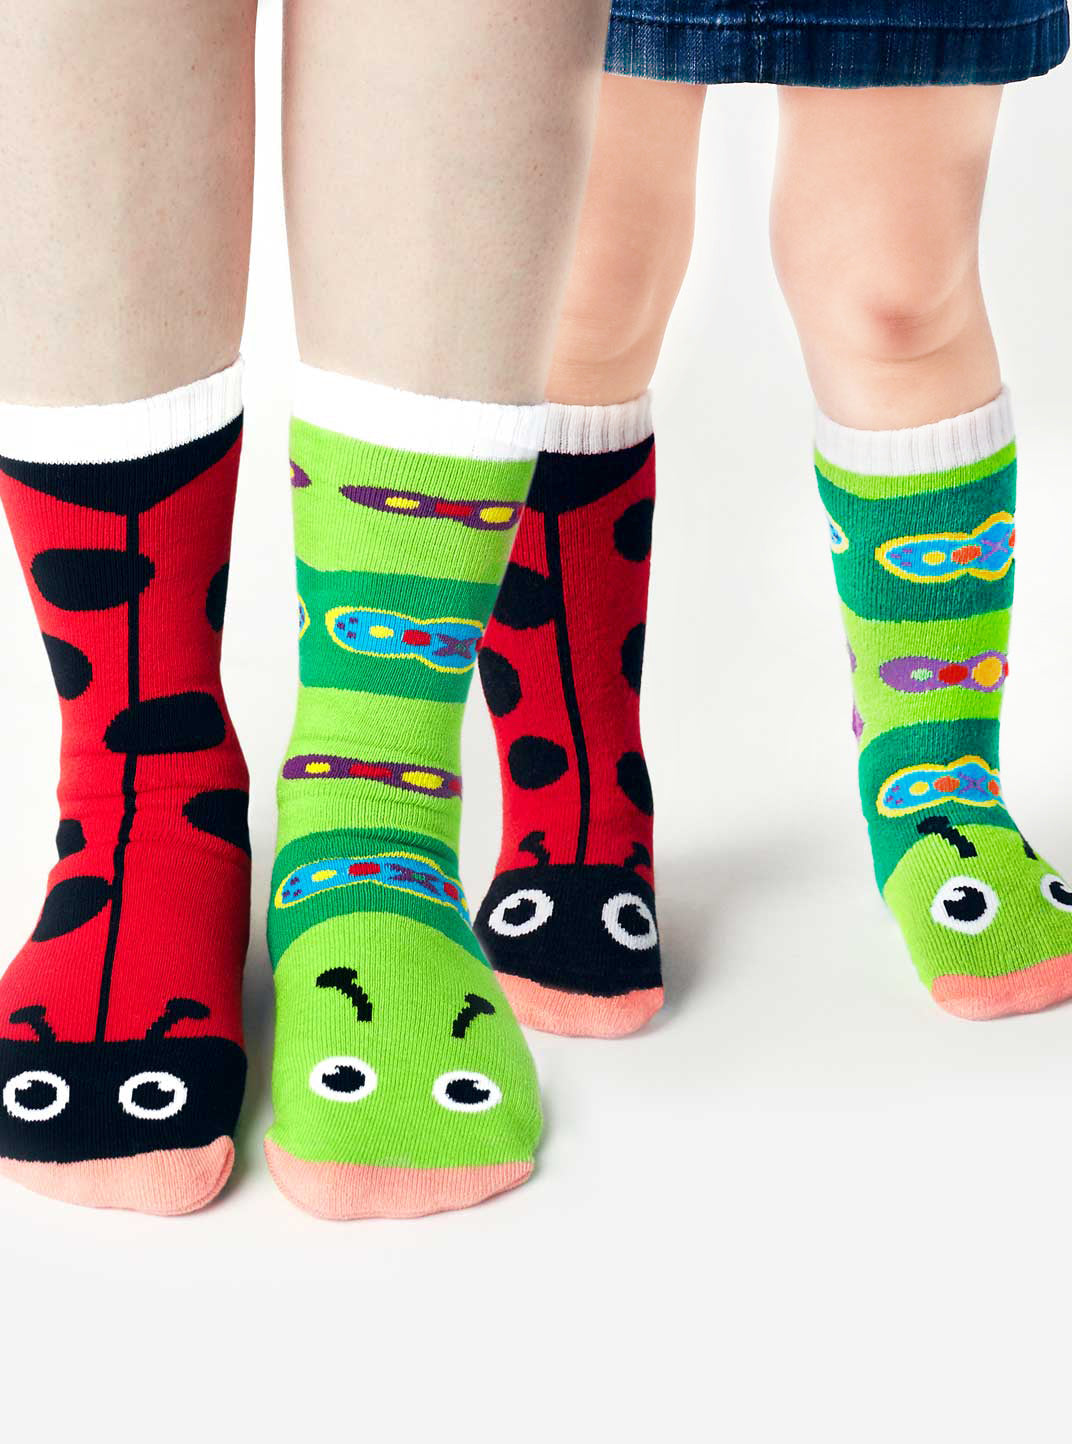 pals-socks-ladybug-caterpillar-feet-matchy-matchy-mom-and-me